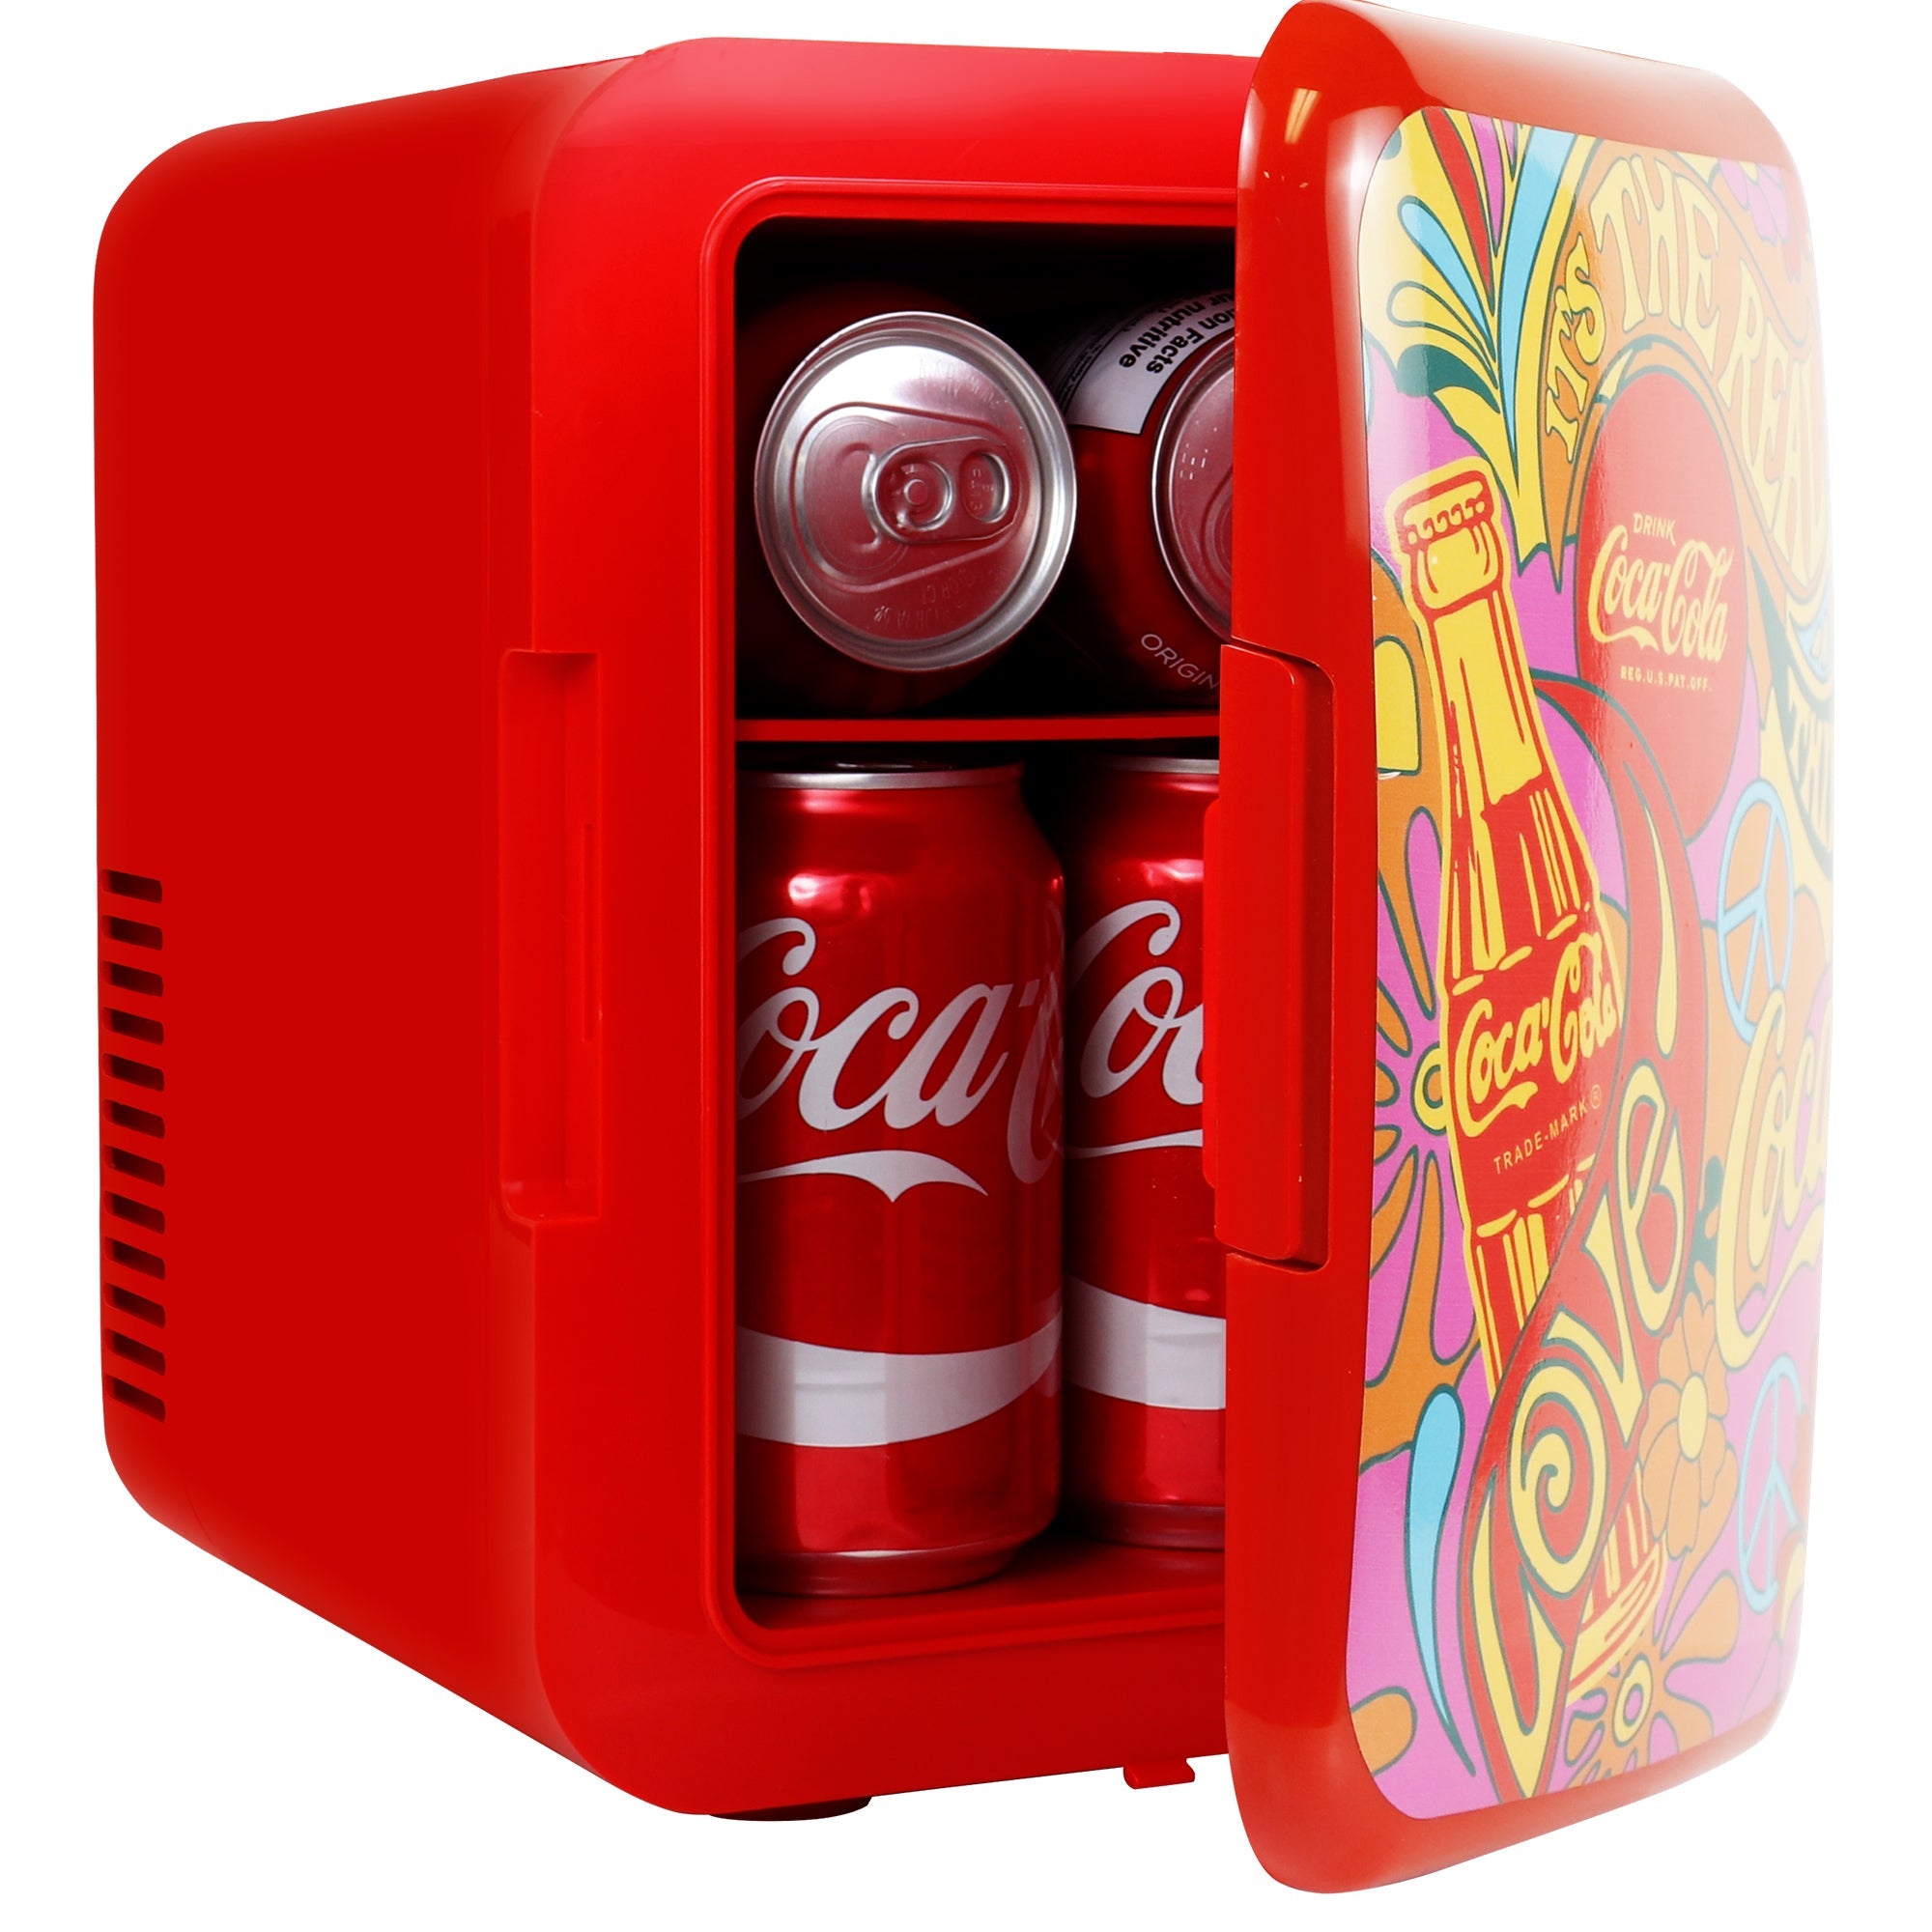 Coca-Cola Fridge Review (Thermoelectric Mini Fridge) - GrowDoctor Guides